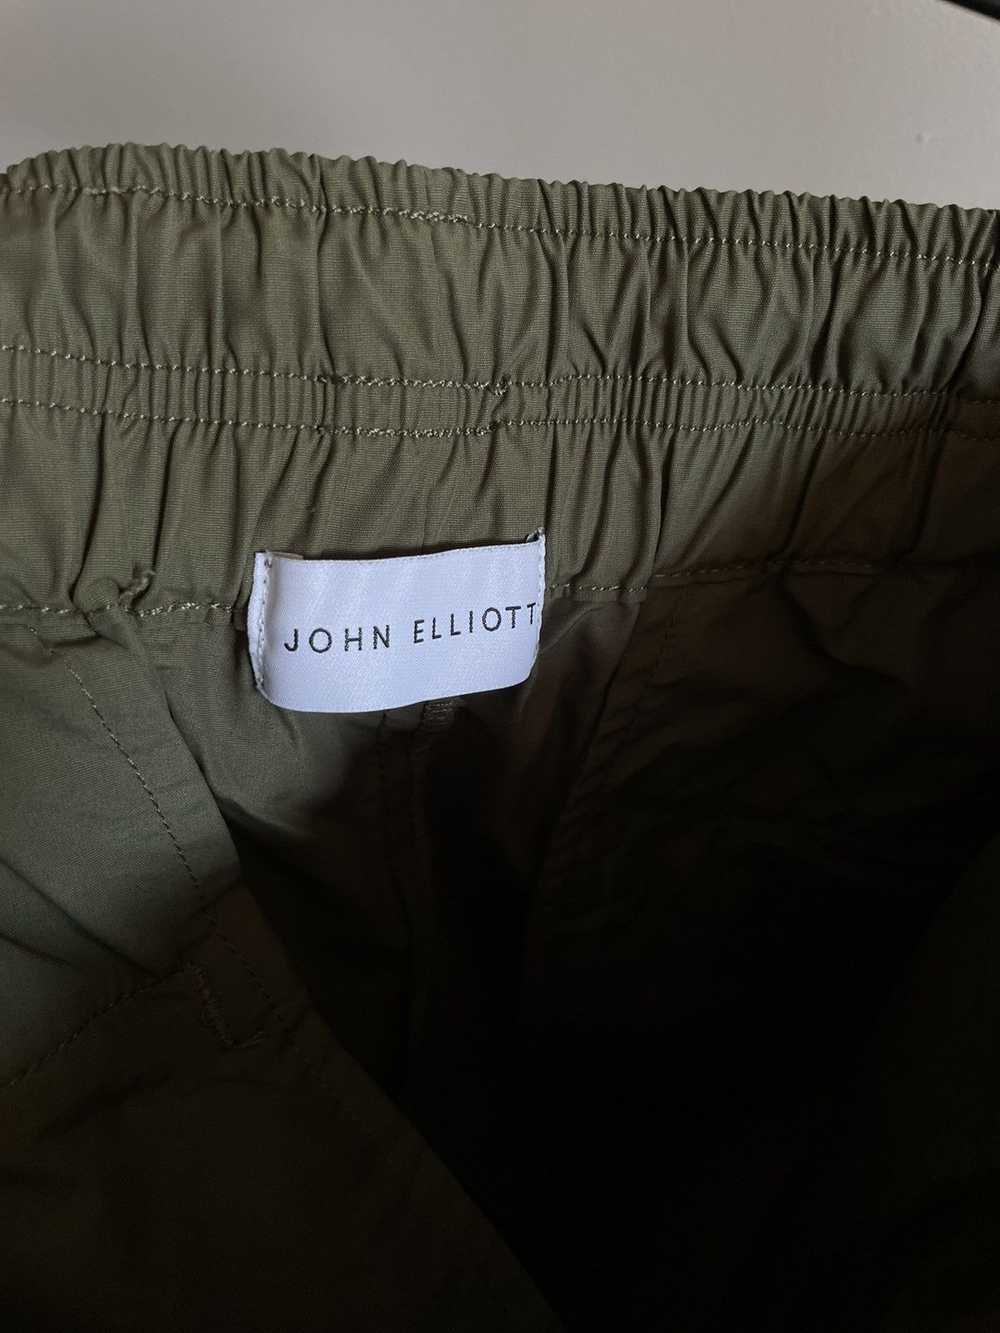 John Elliott JOHN ELLIOT HIMALAYAN PANTS - image 5